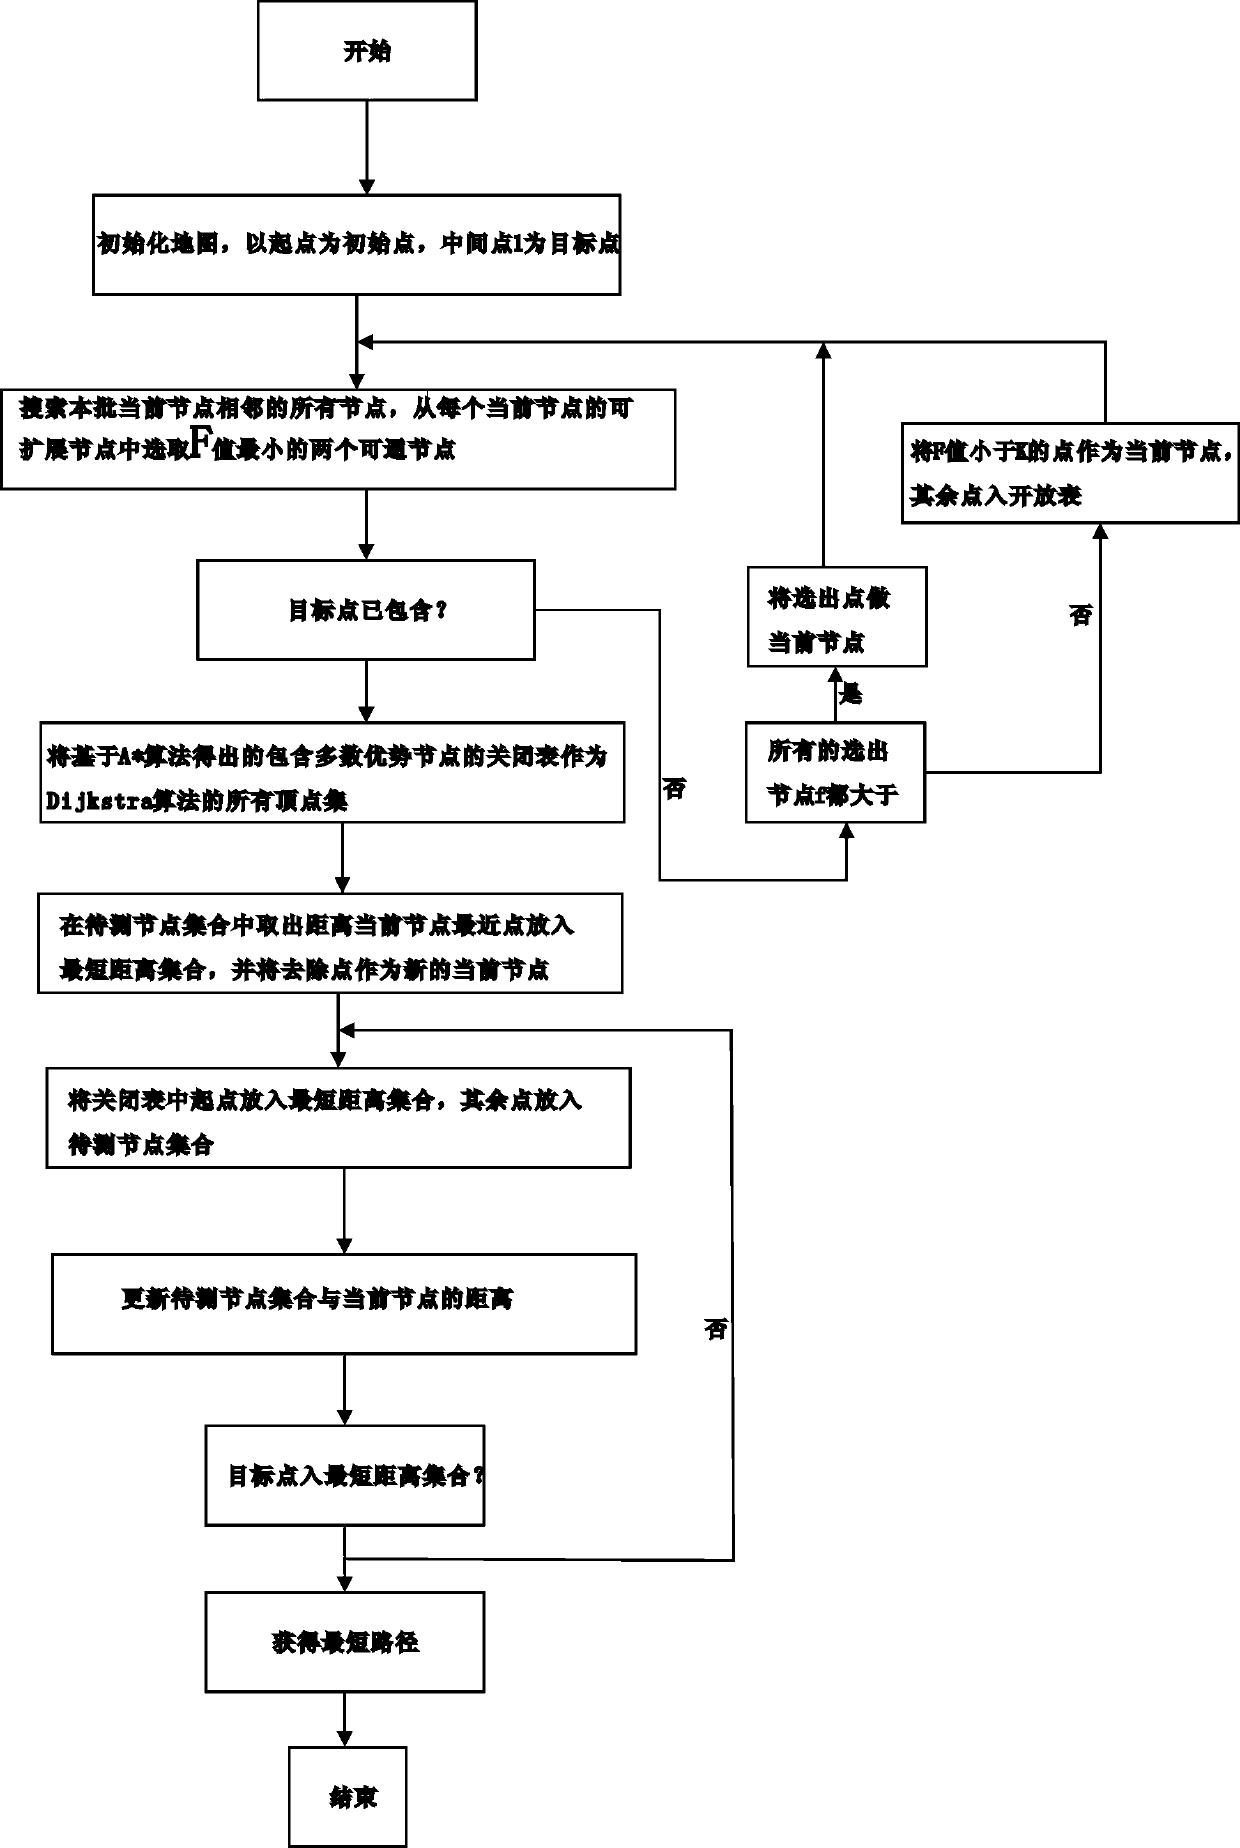 Method for planning shortest path of agricultural machinery based on Dijkstra algorithm